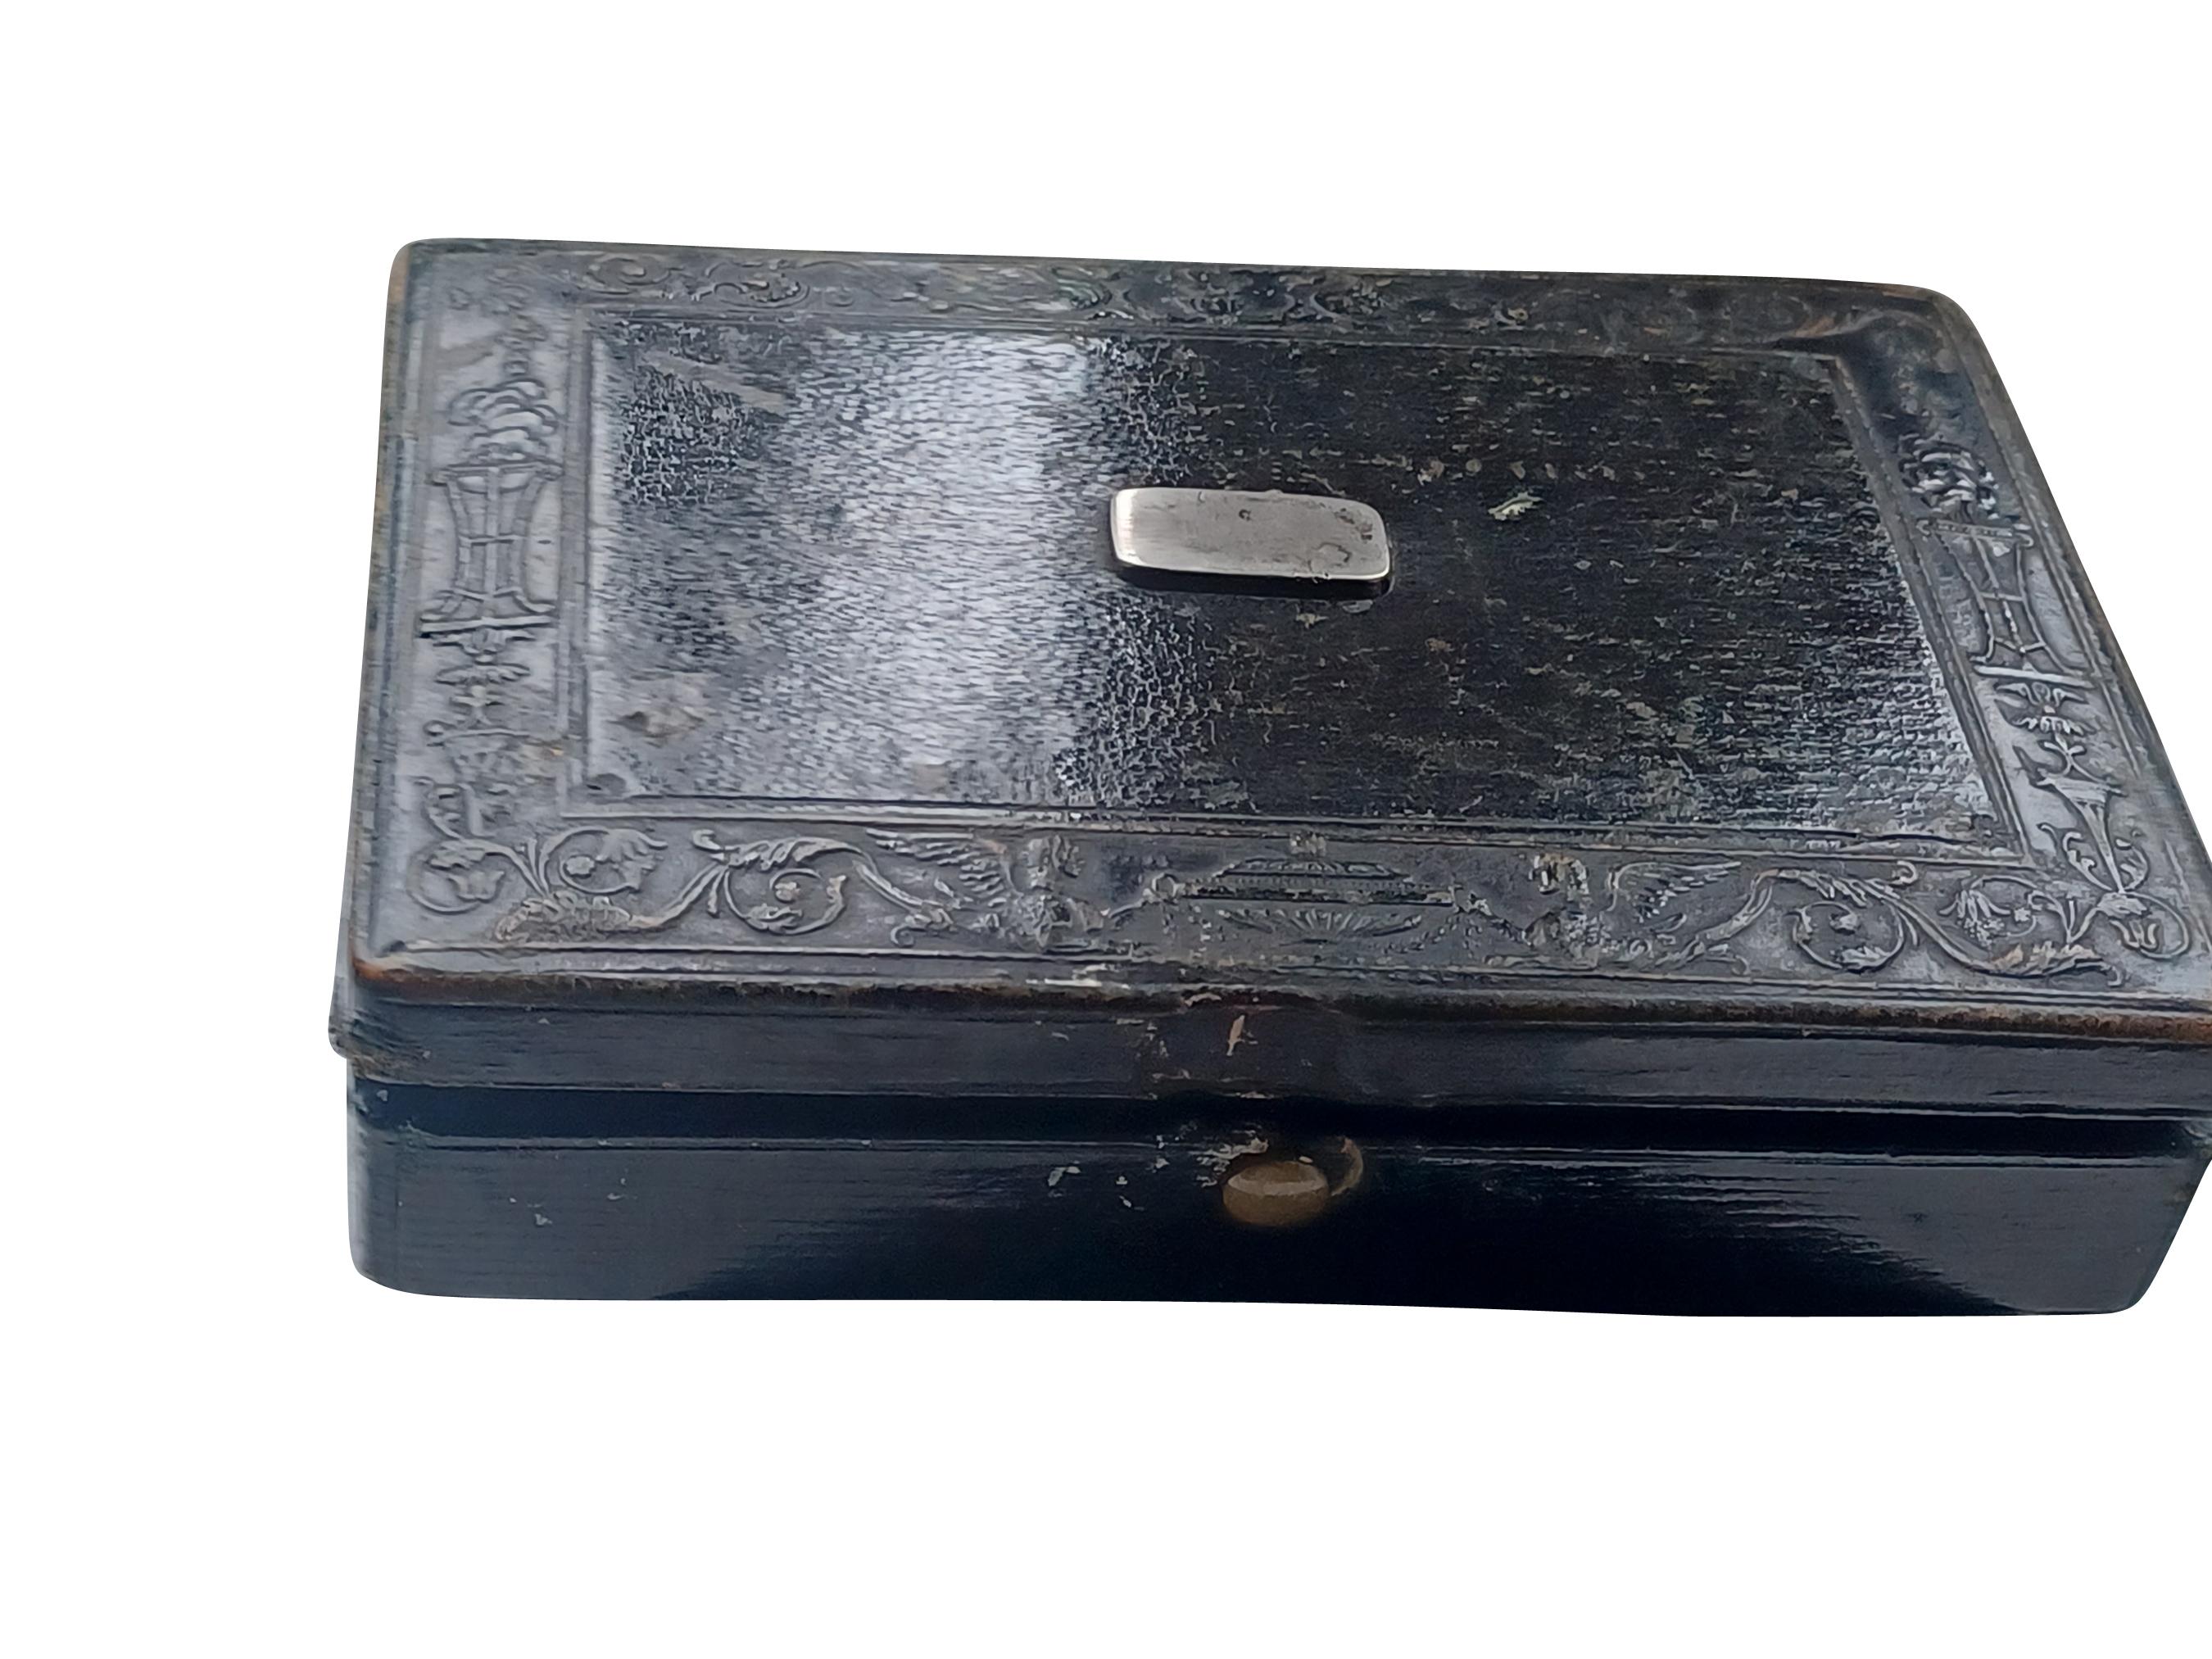 Rare Antique George IV Lady’s Sewing Necessaire with Original Case, est. 1825 For Sale 8